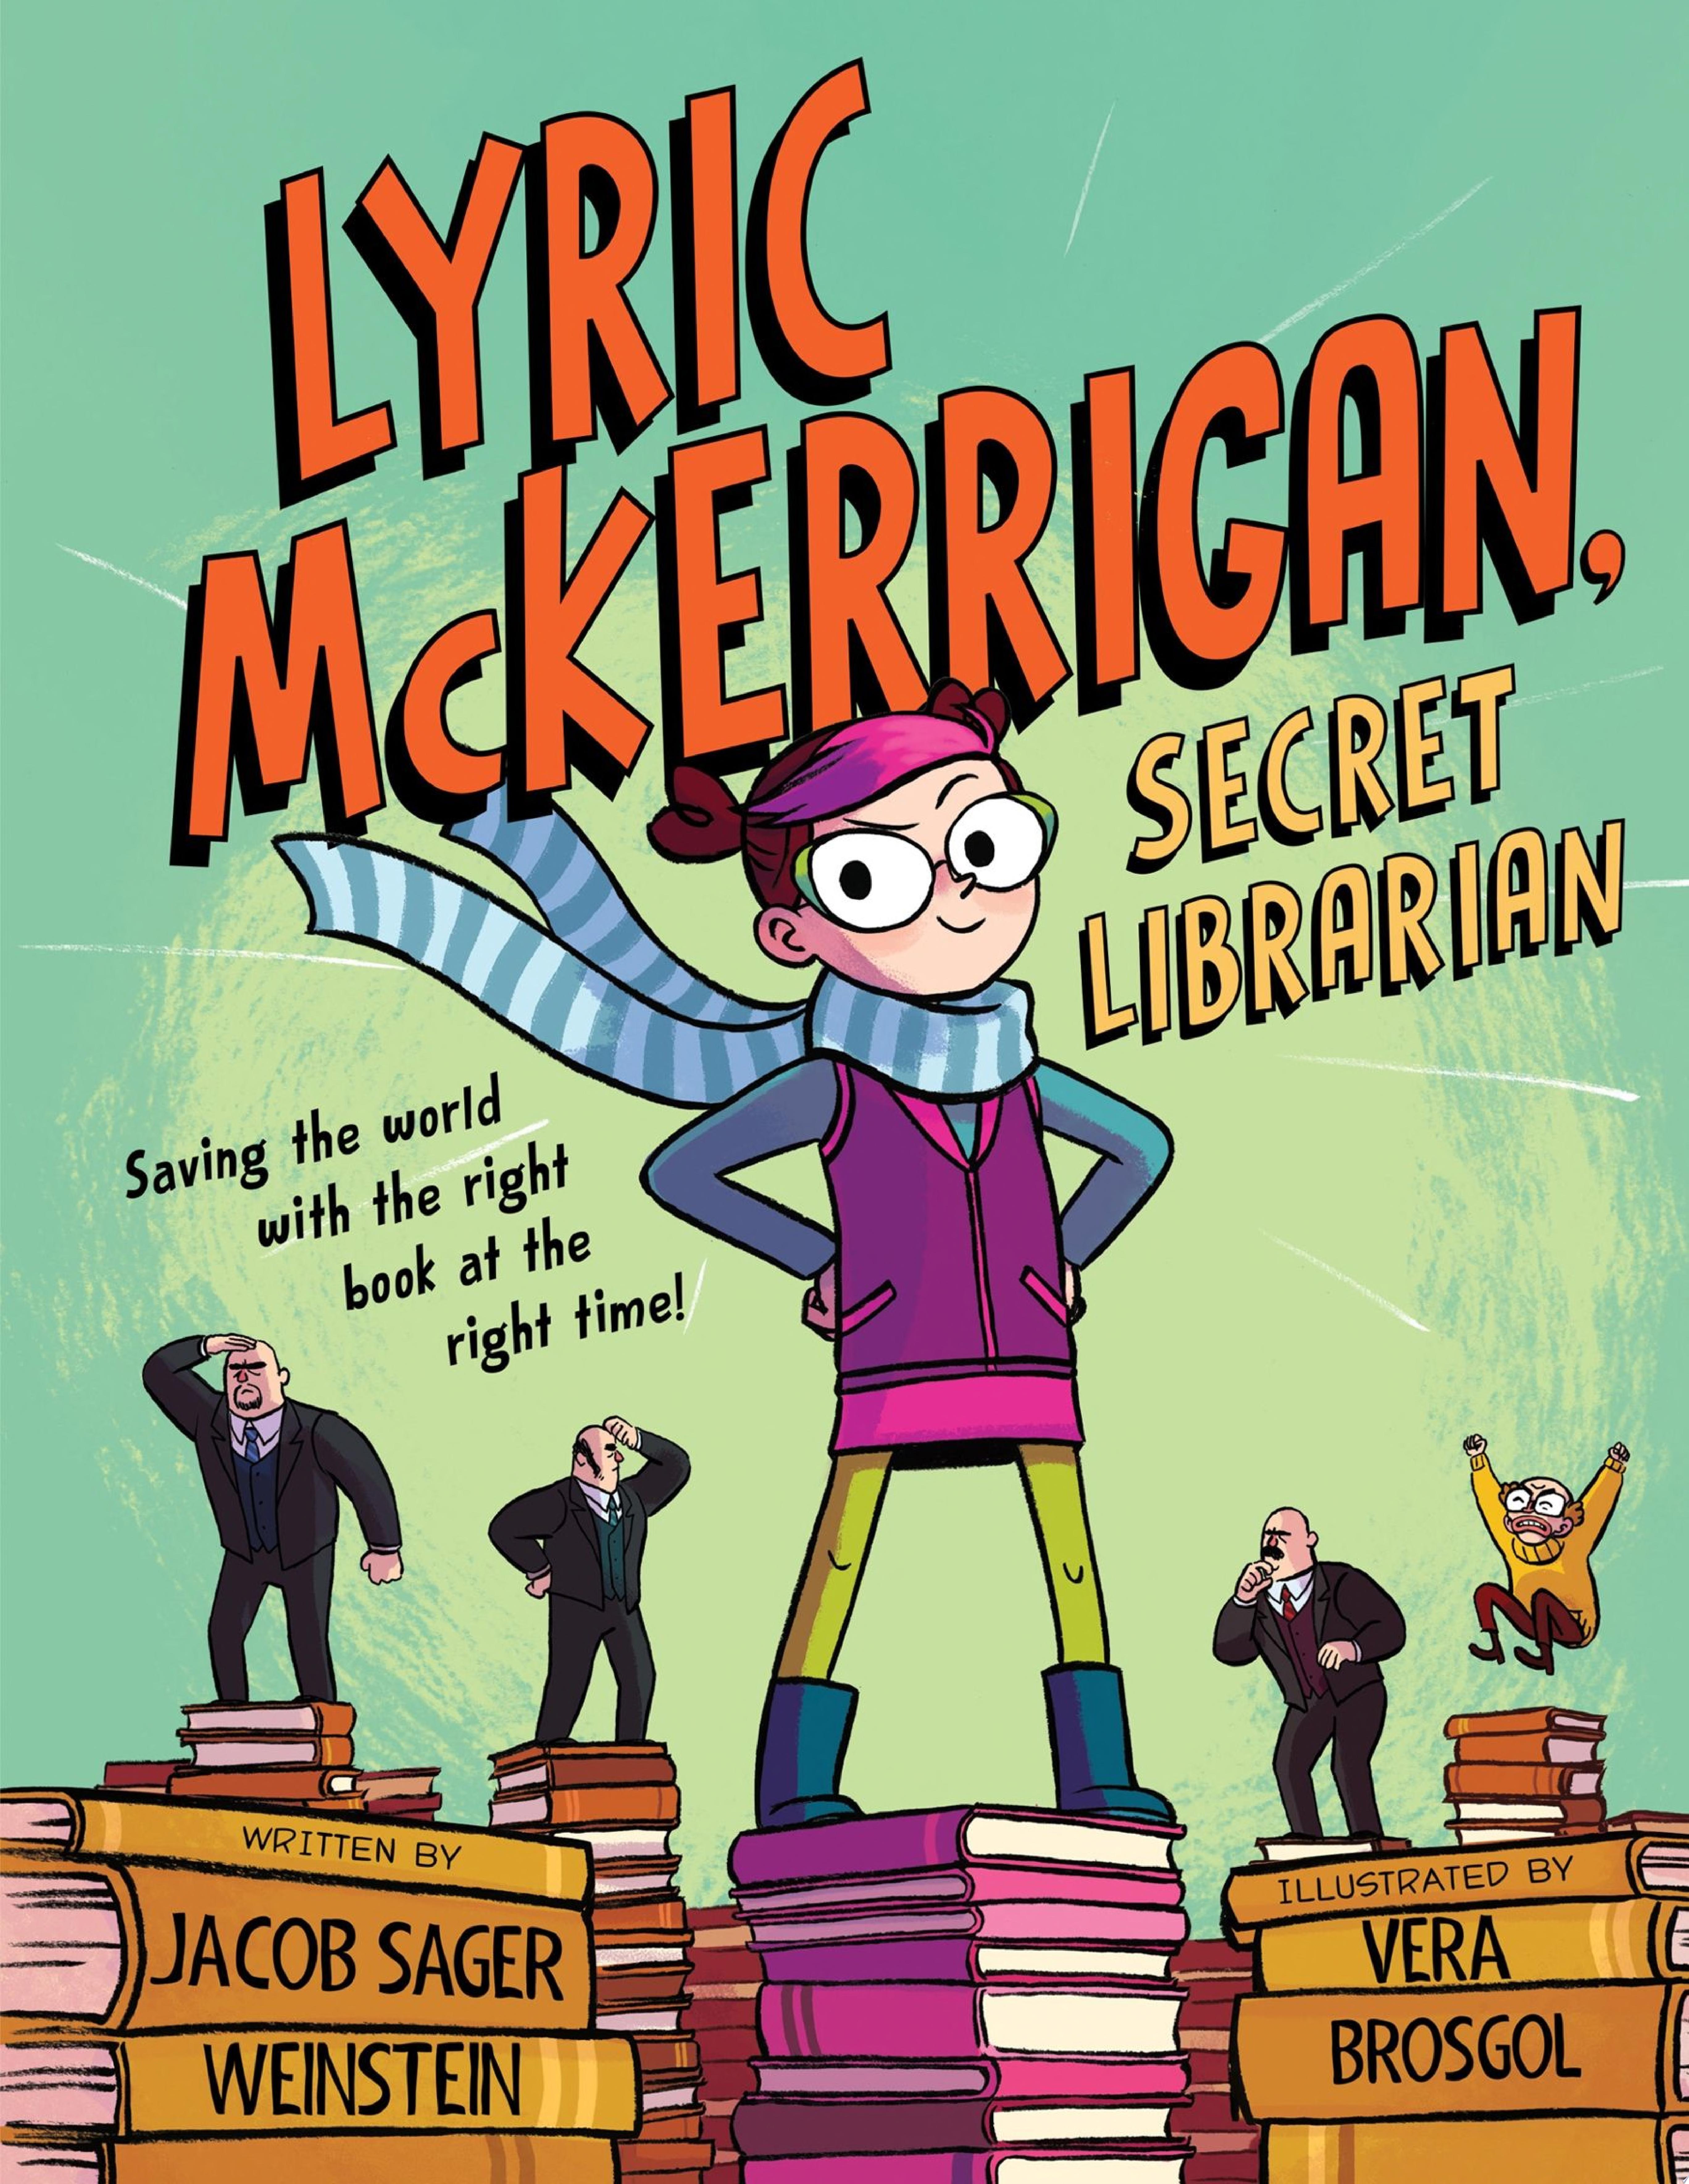 Image for "Lyric McKerrigan, Secret Librarian"